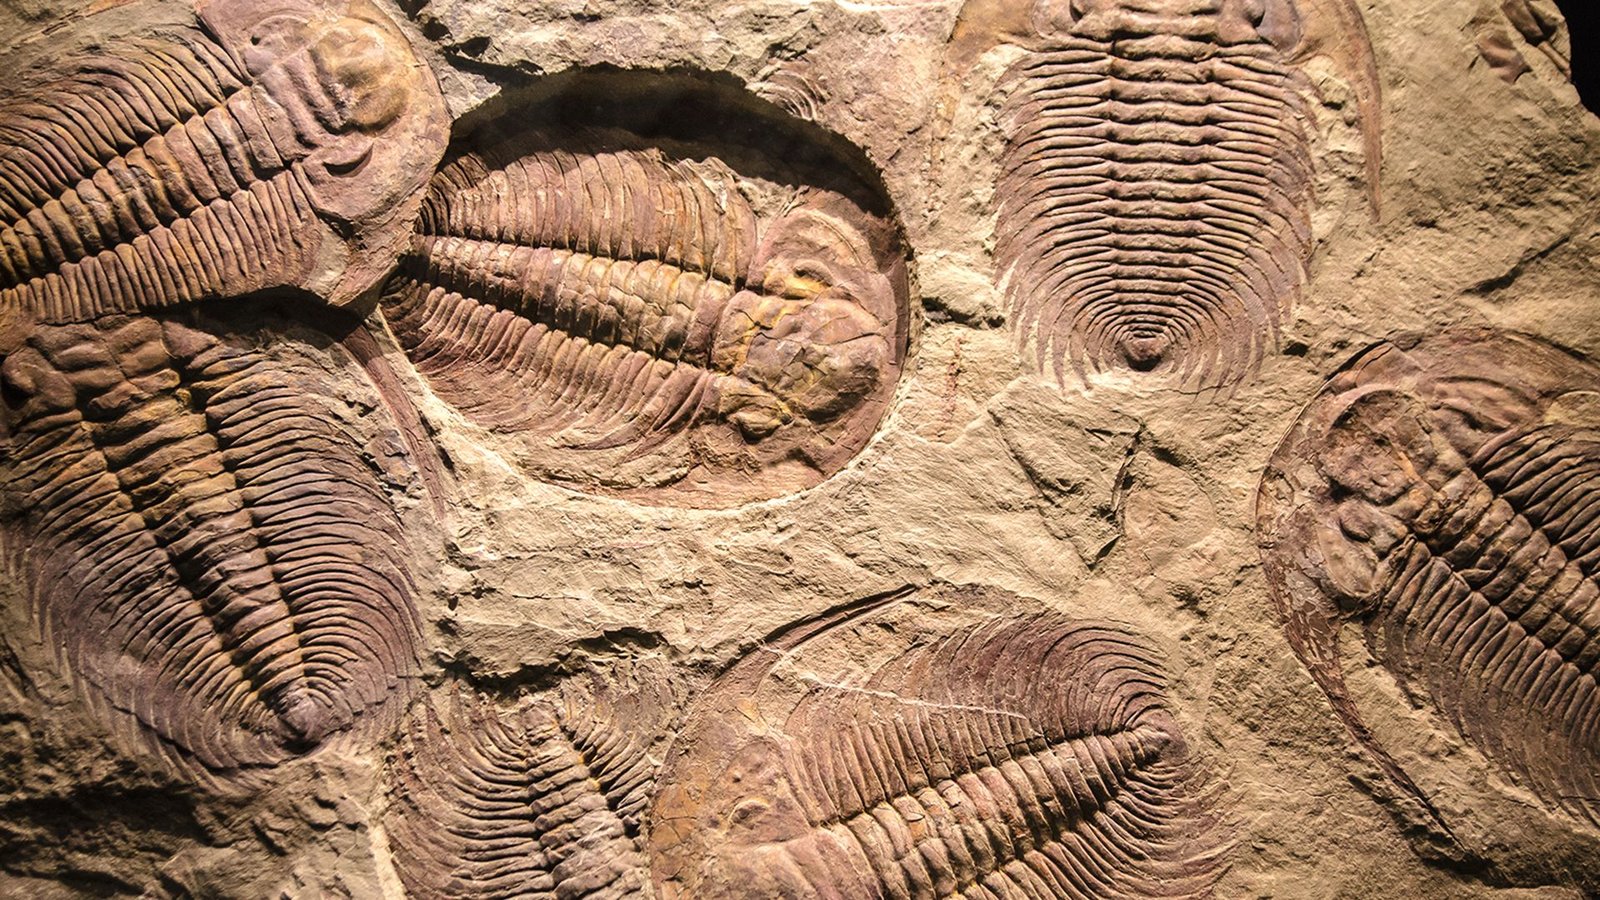 Cambrian Explosion to Dinosaur Extinction